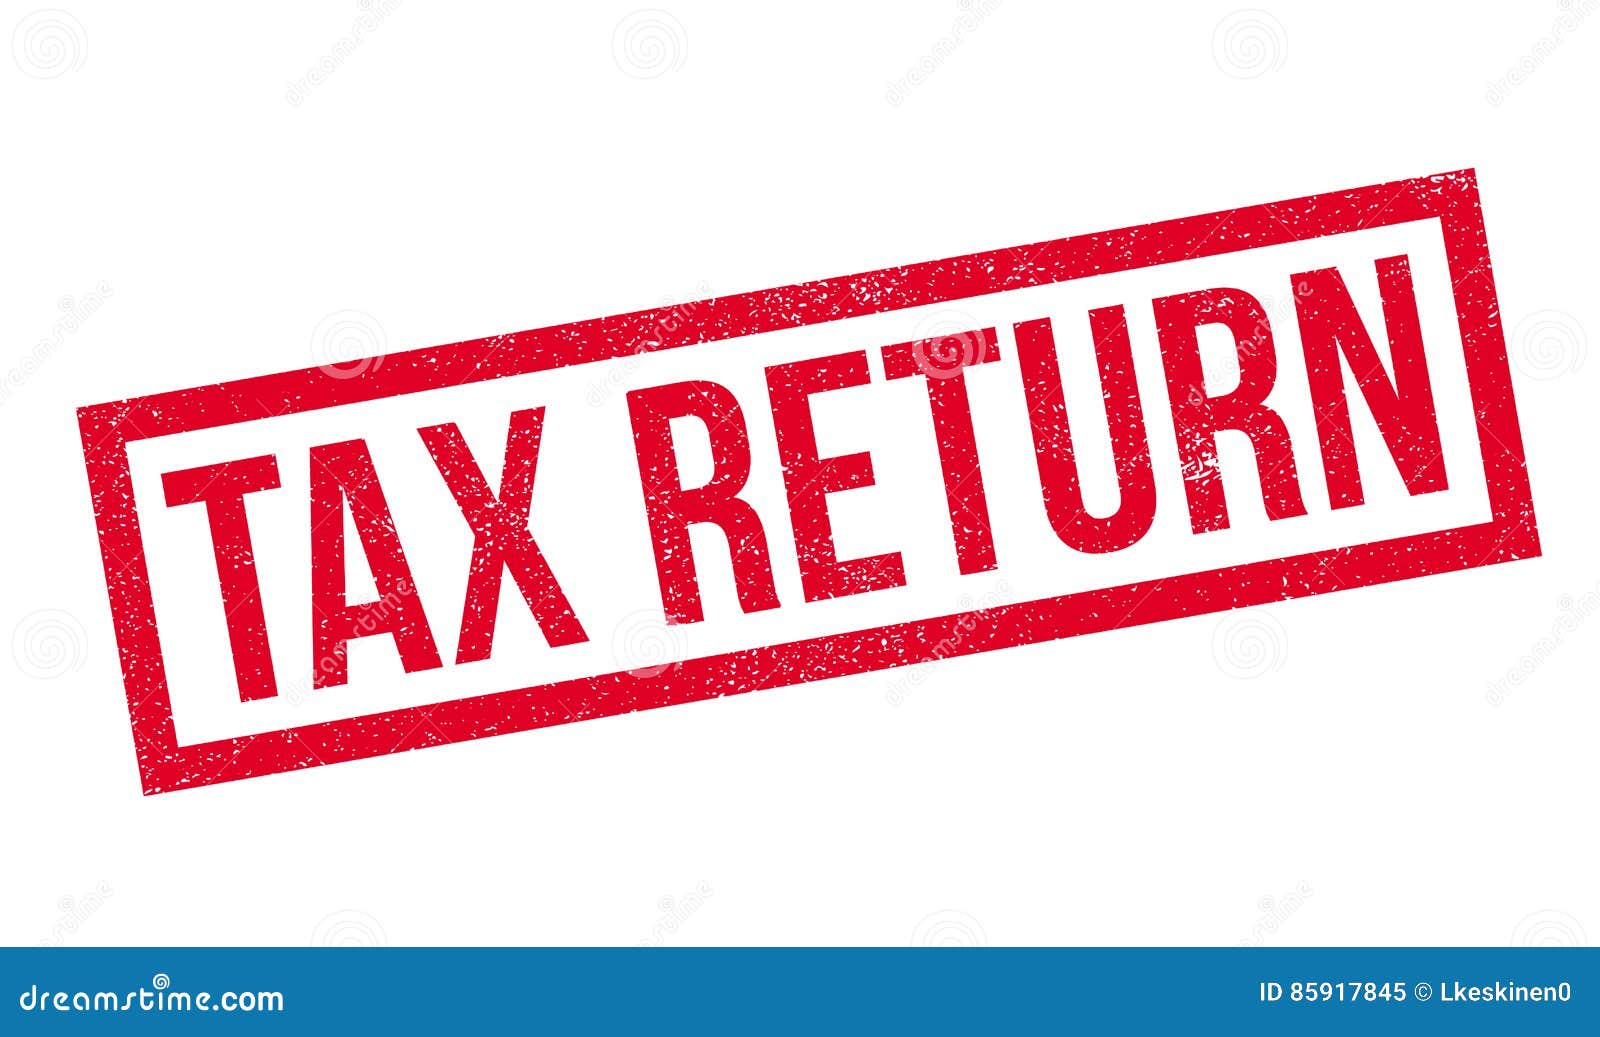 tax return rubber stamp